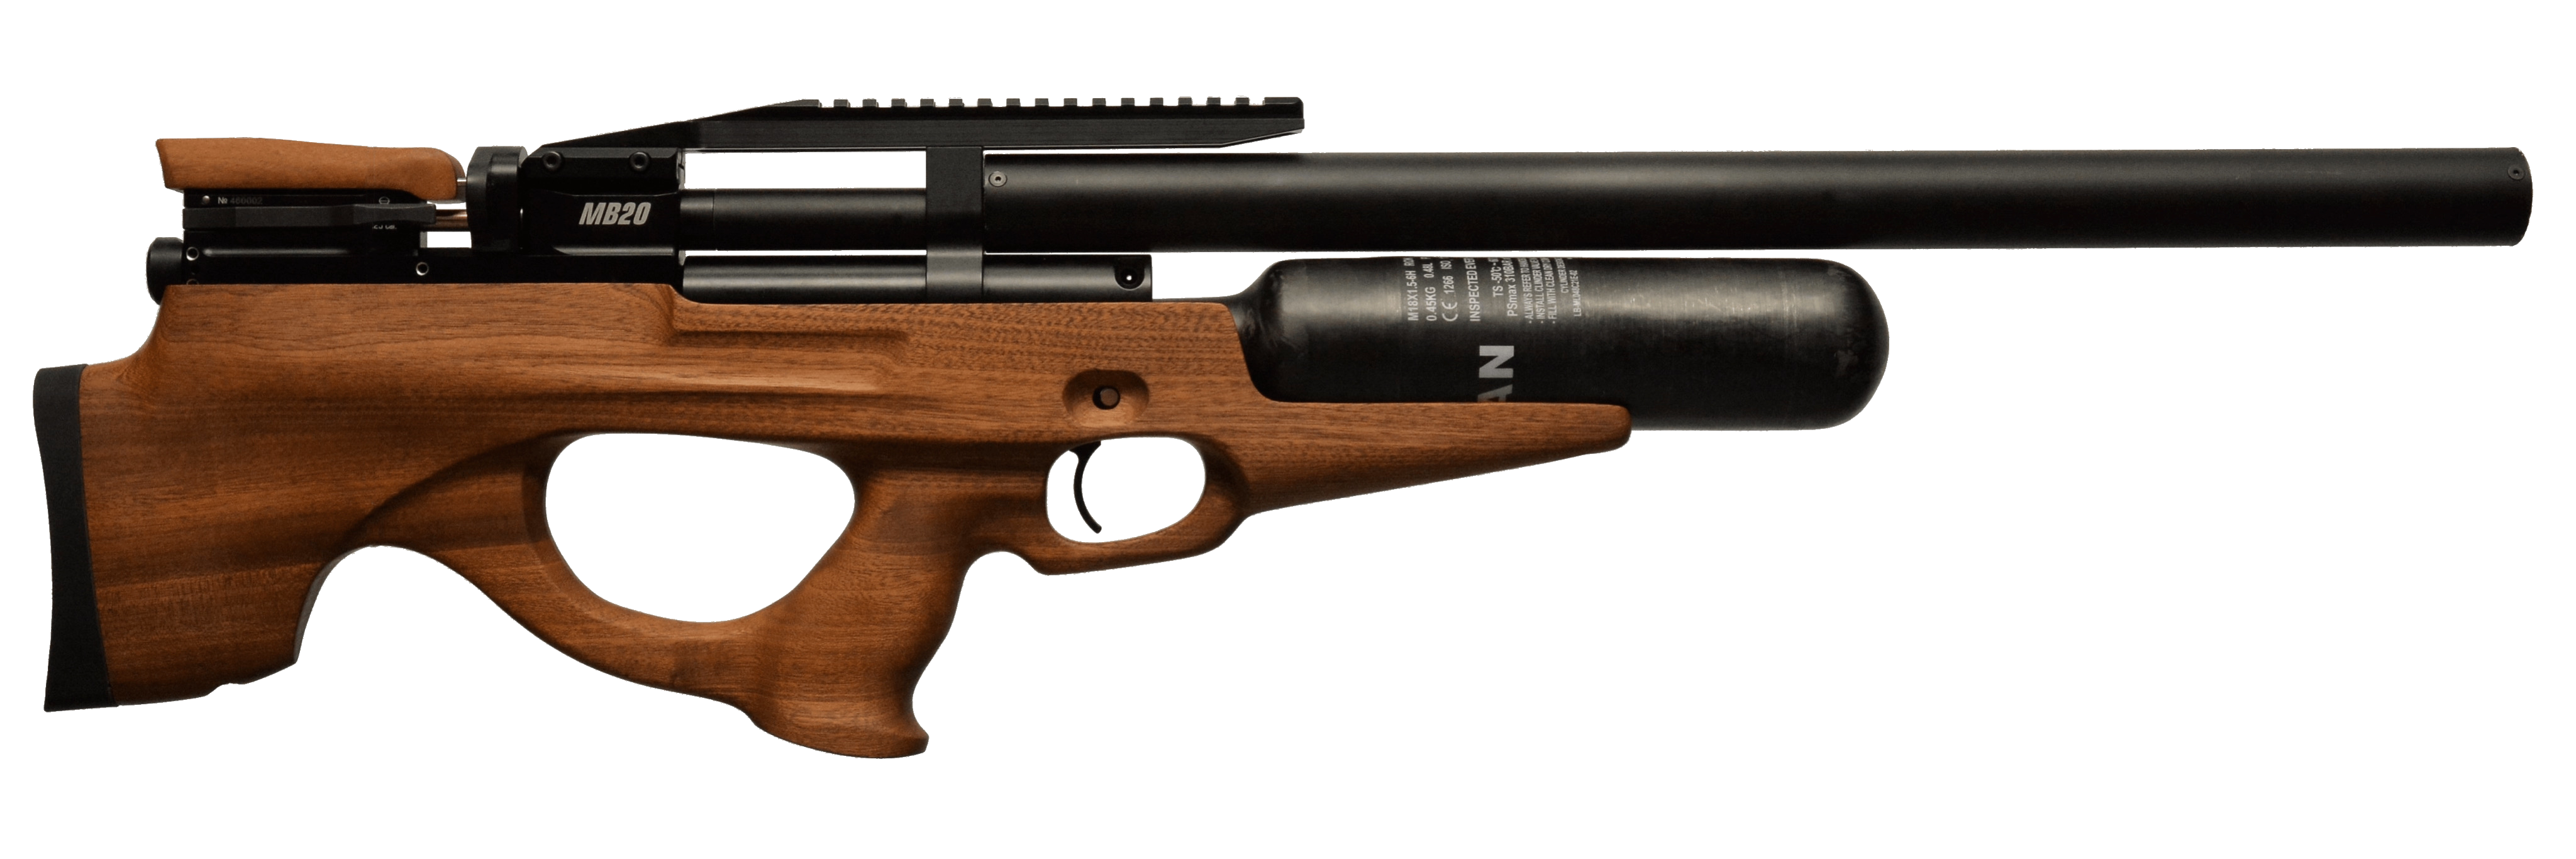 Пневматическая PCP винтовка ATAMAN Булл-пап MB20, кал.6,35мм (Walnut)